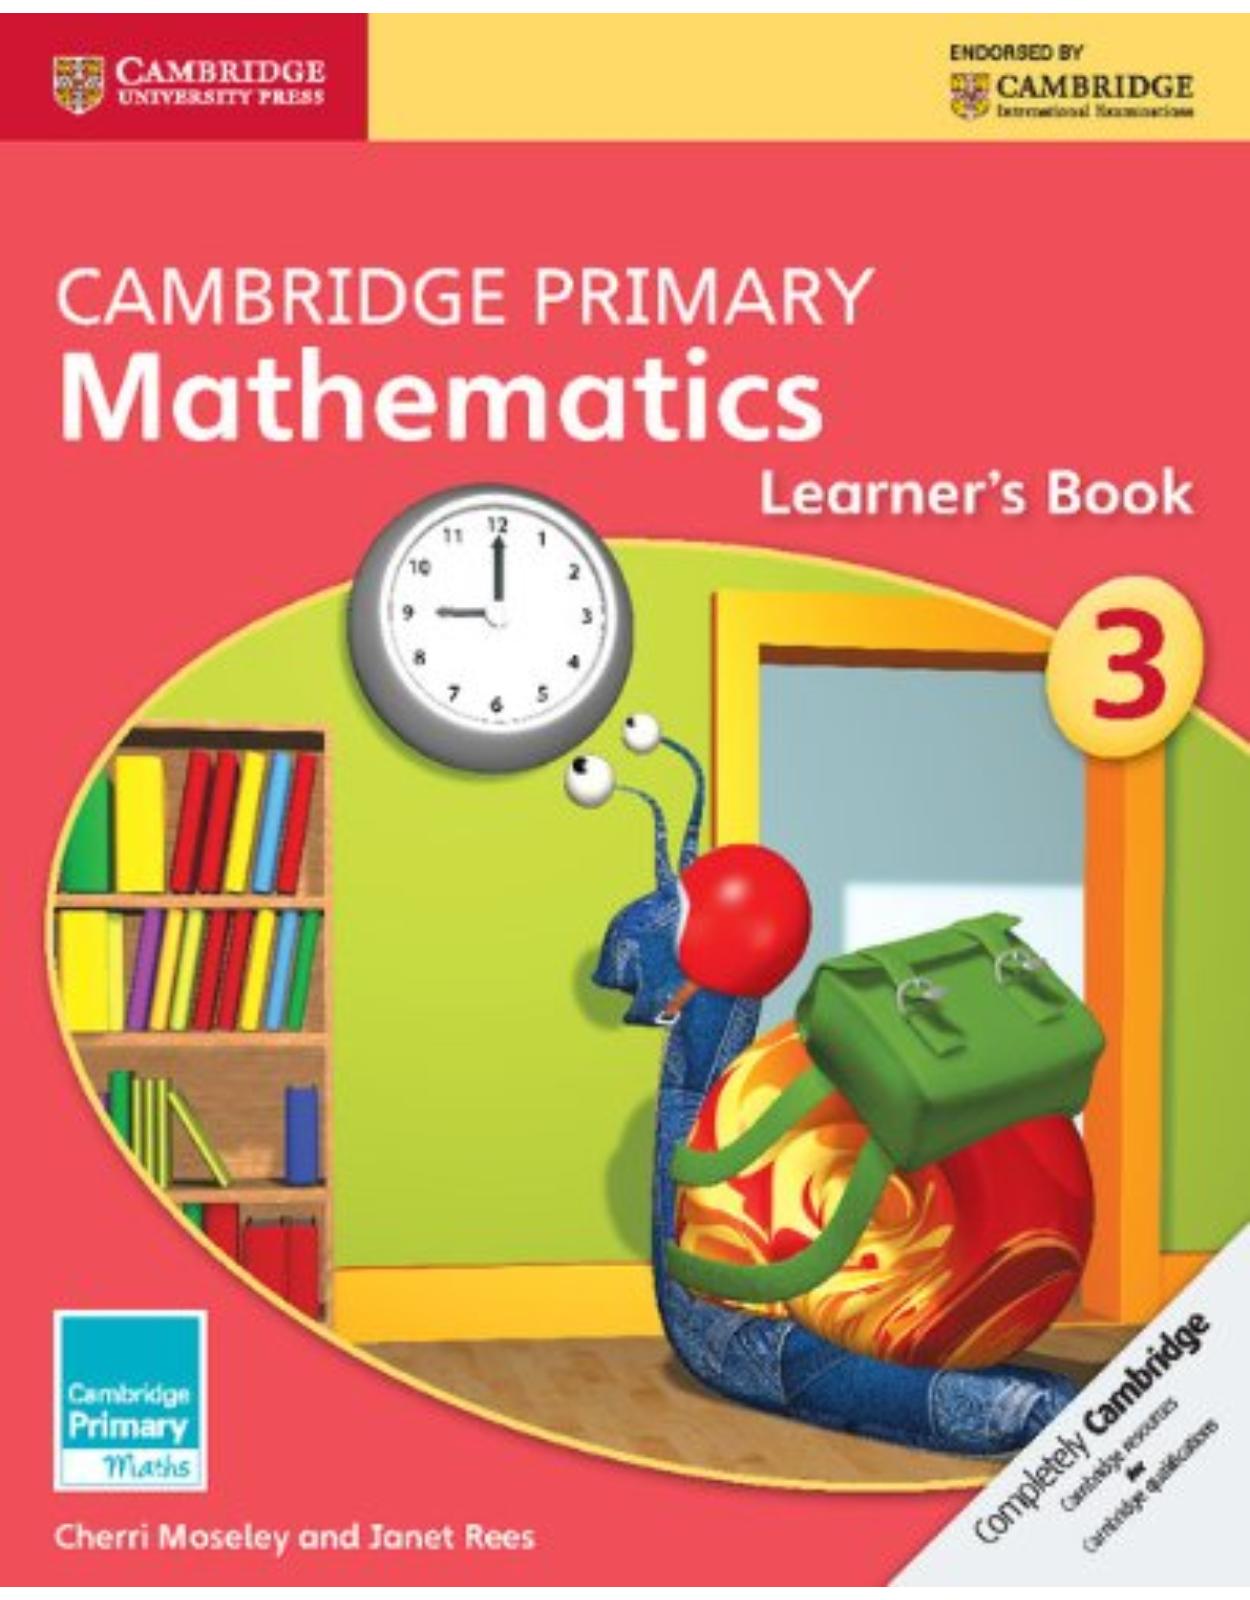 Cambridge Primary Mathematics Stage 3 Learner's Book (Cambridge International Examinations)